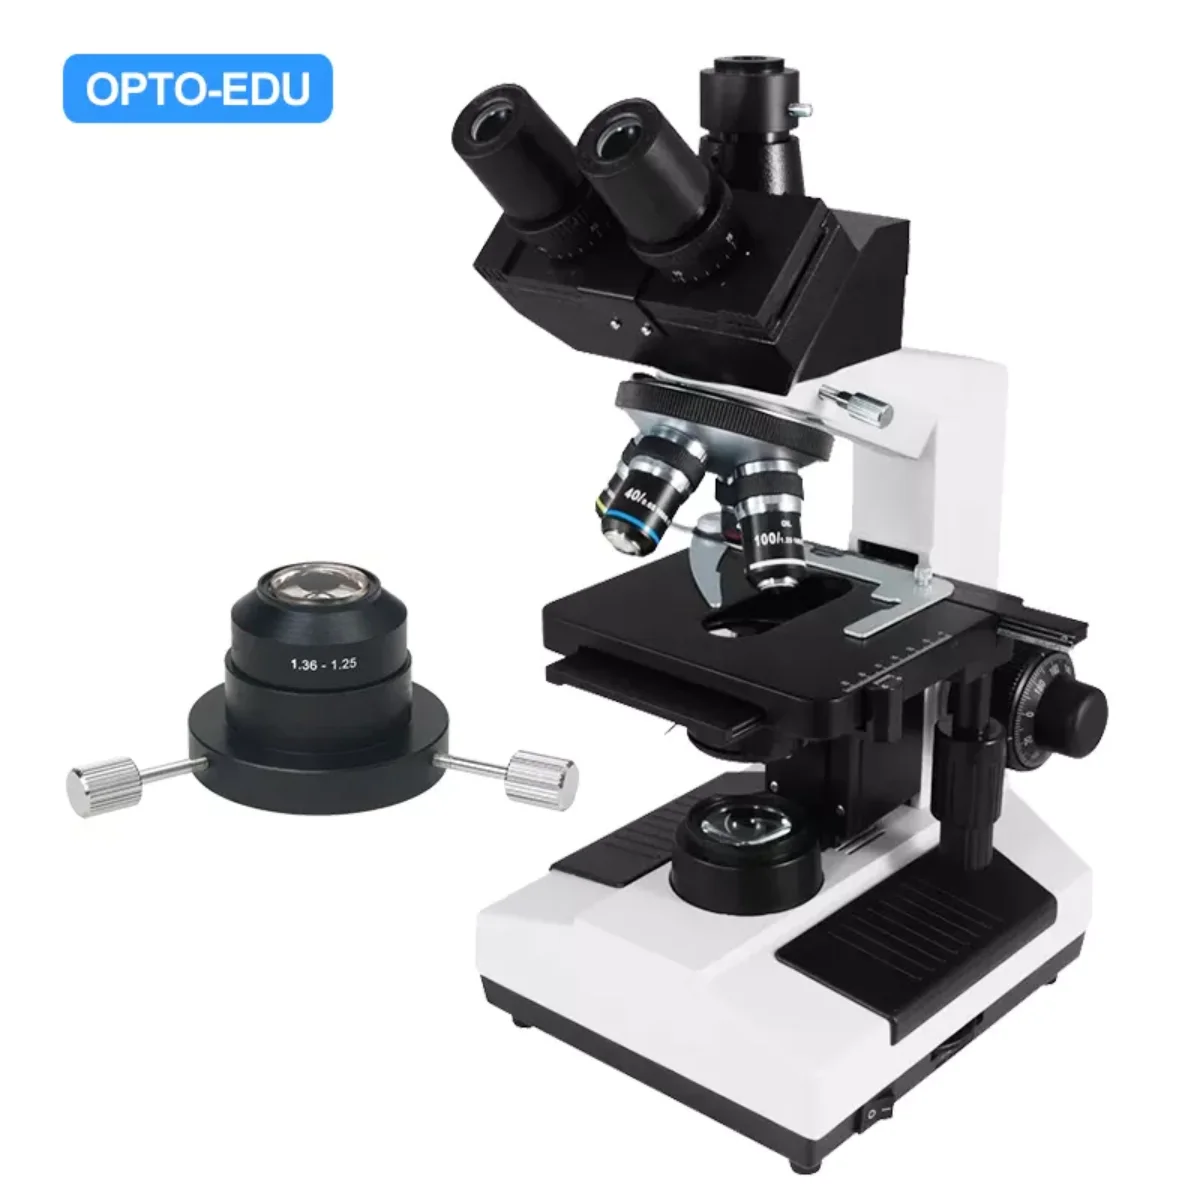 

OPTO-EDU A10.1007 40-1000x trinocular live blood analysis Dark Field Microscope